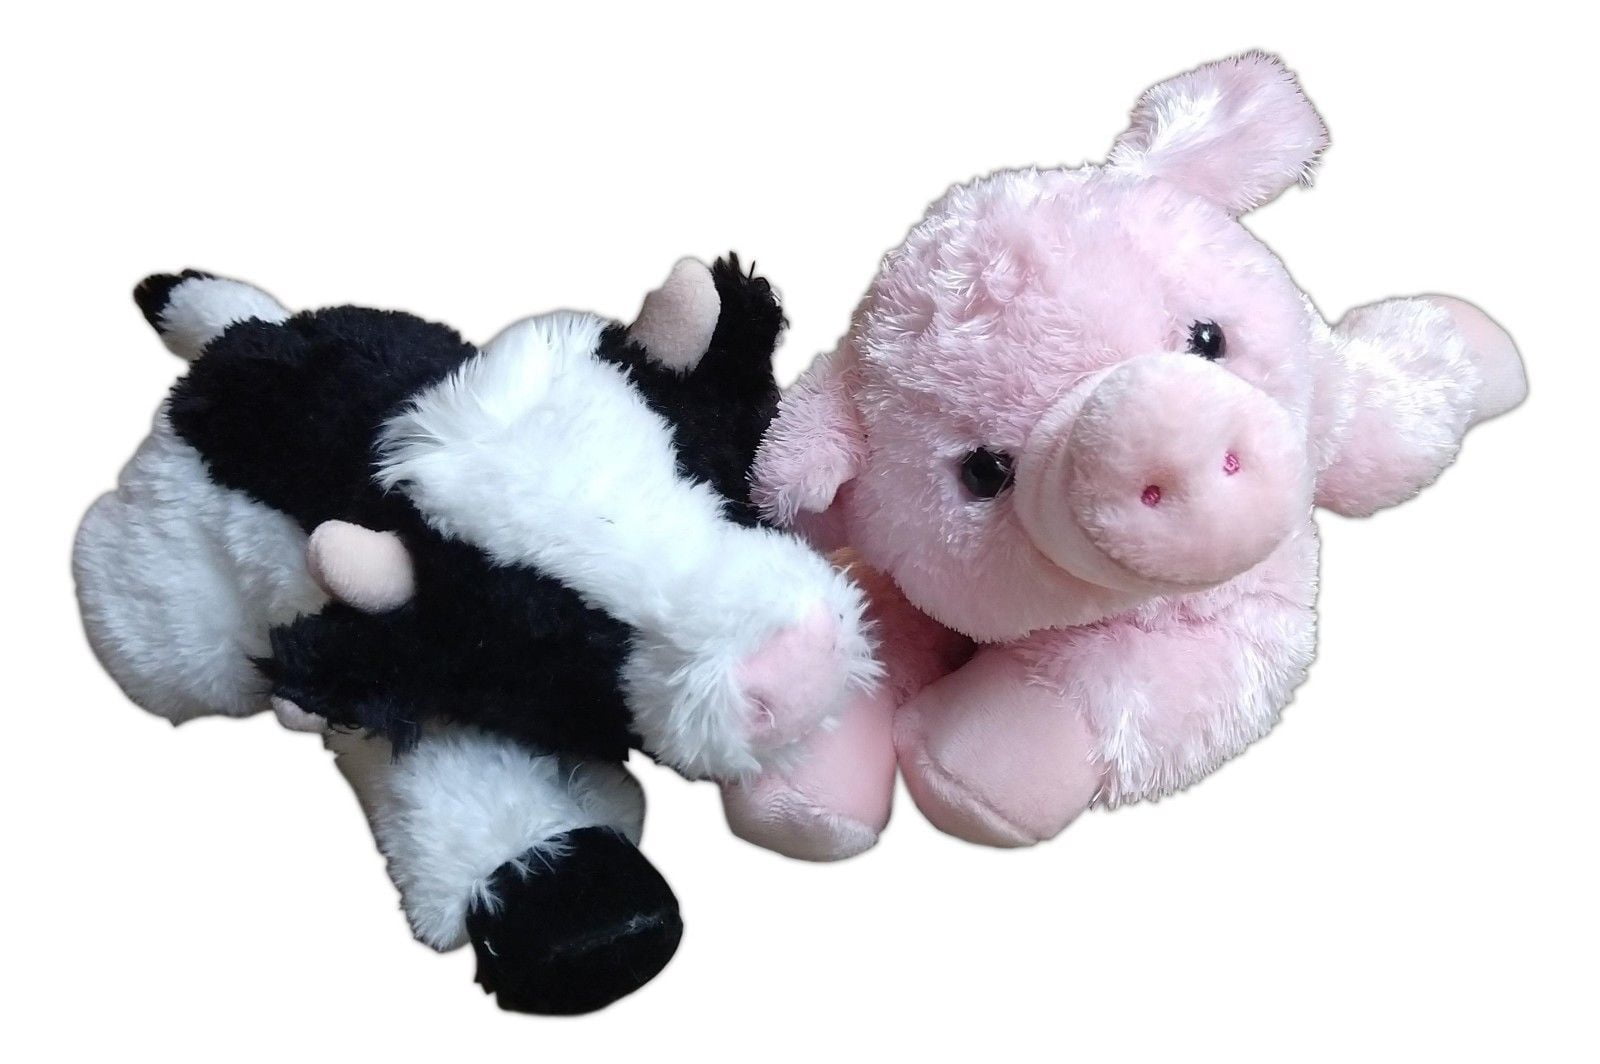  Aurora World Pig, Cow and Chicken Stuffed Animal Plush Toy, Farm Animals Theme